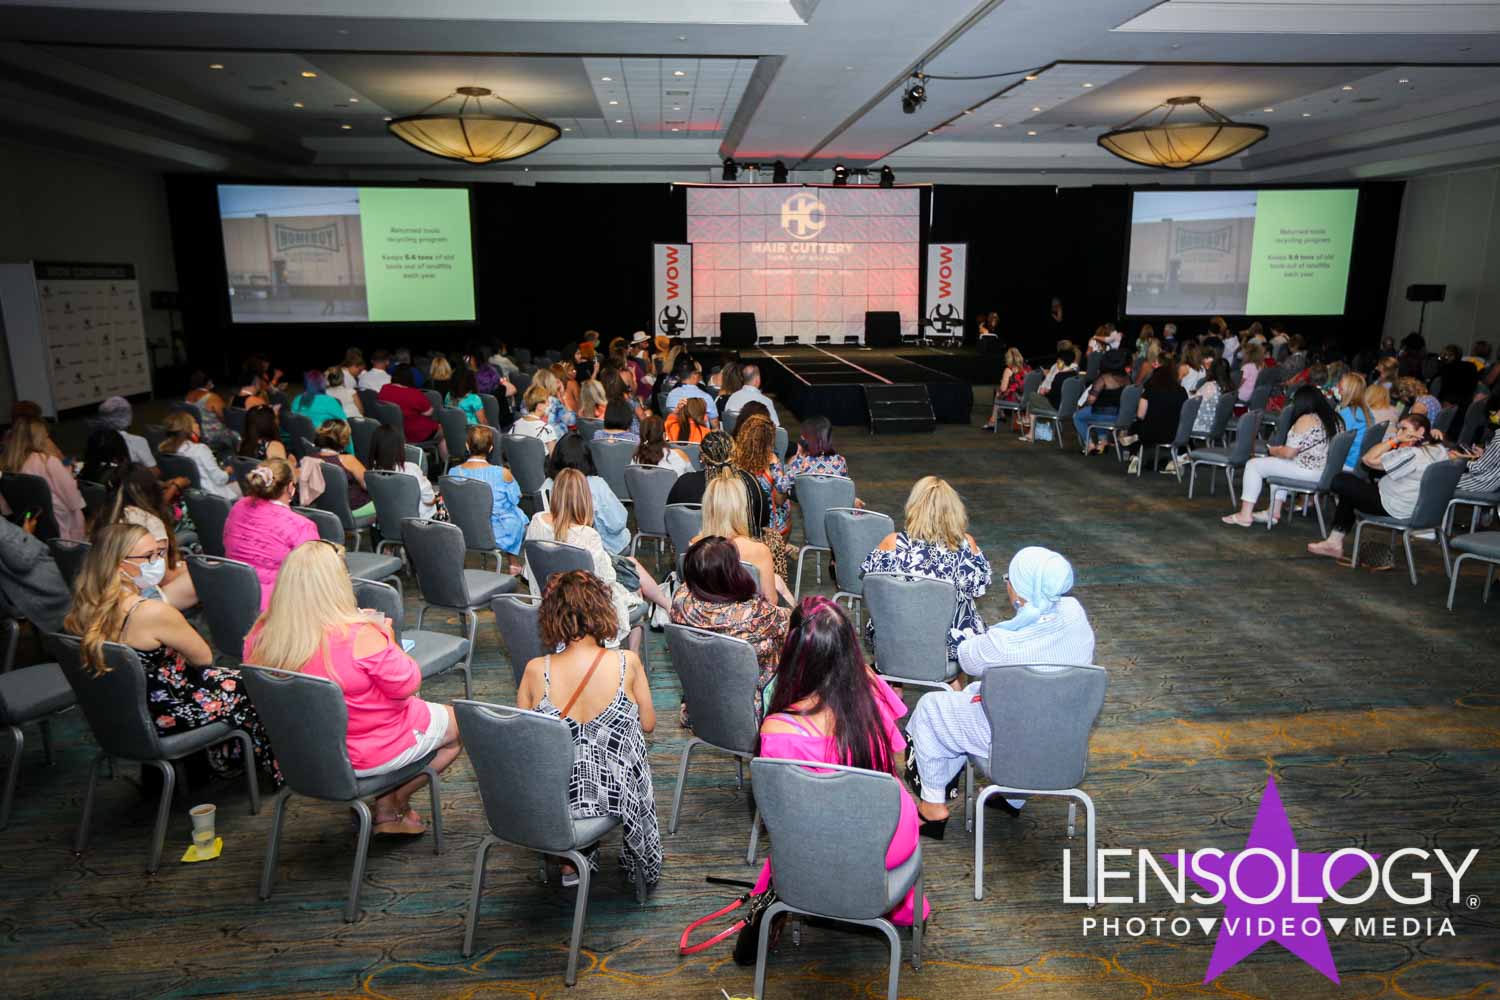 LENSOLOGY.NET - Haircuttery HC WOW 2021 corporate event, Ft Lauderdale, FL.
Email: info@lensology.net
www.lensology.net